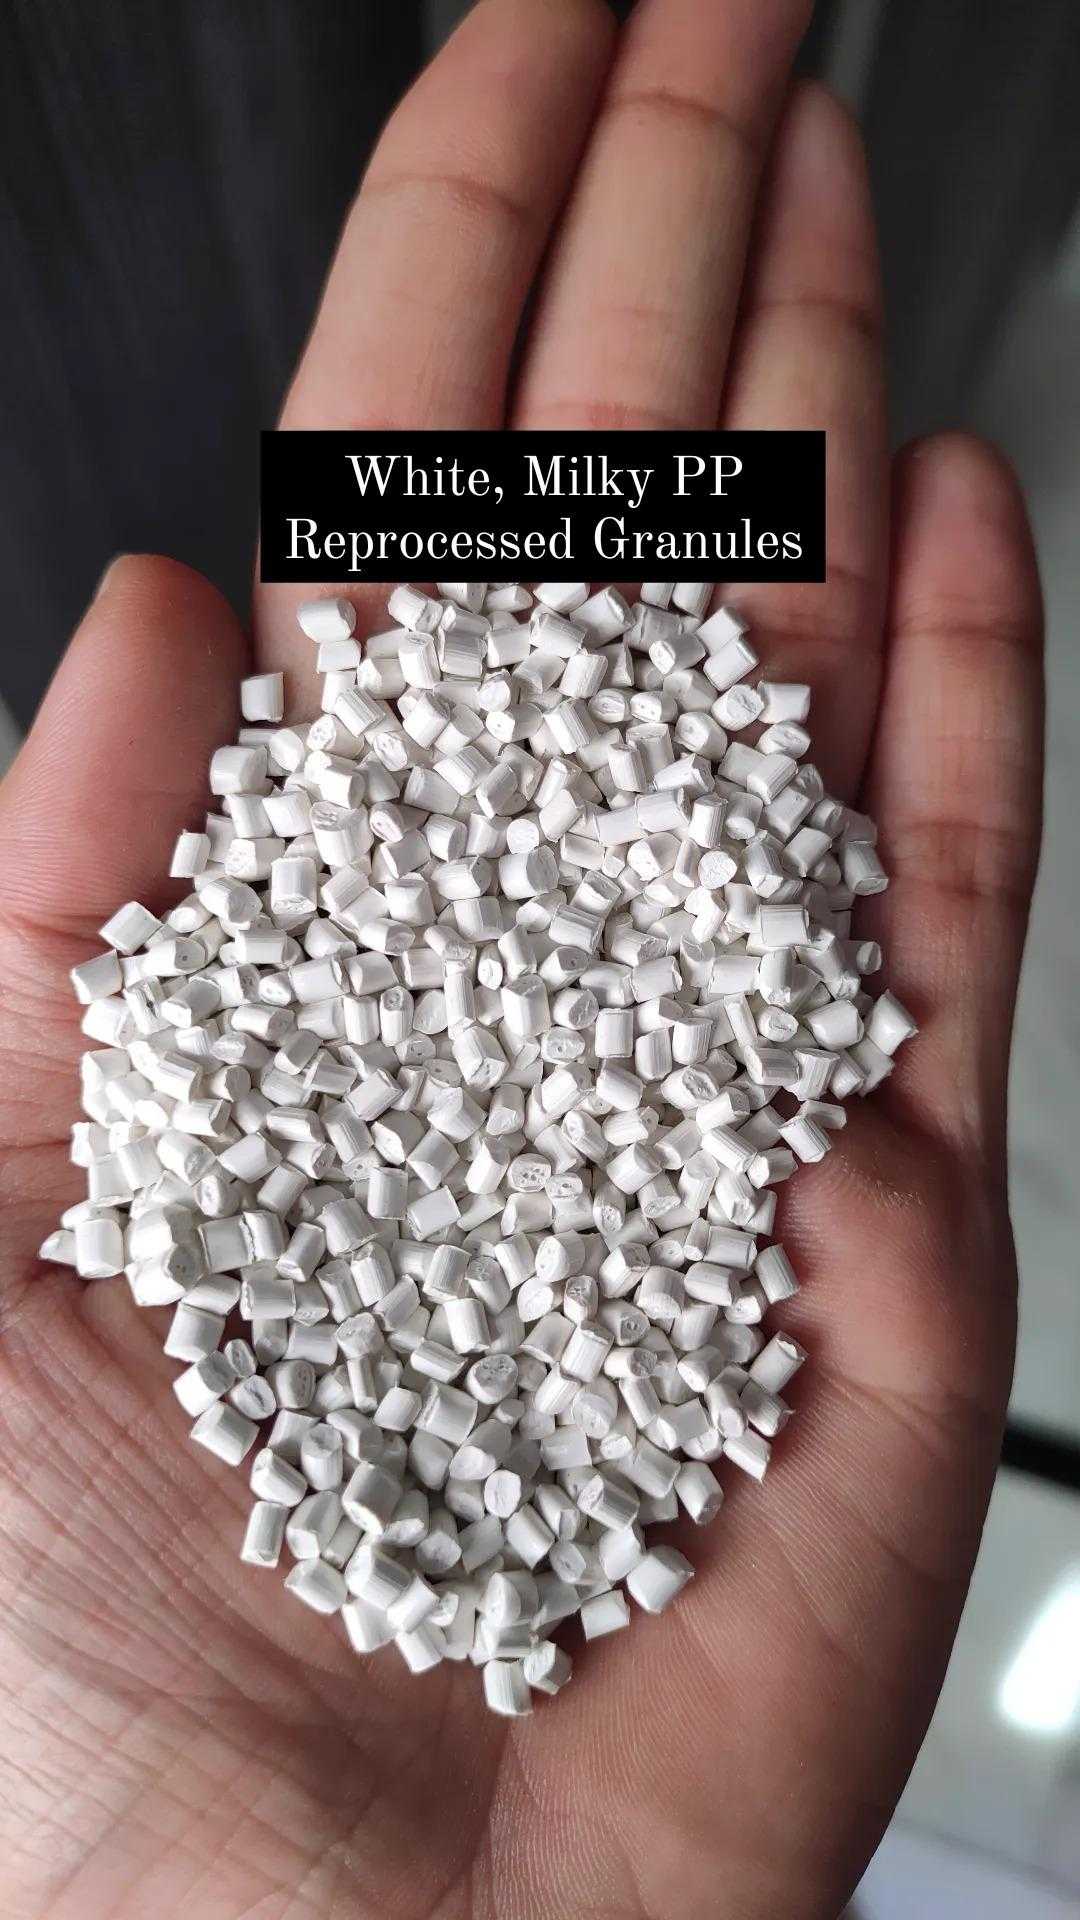 MILKY PP GRANULES PP Reprocess Granule Injection Molding tikri kalan delhi india Plastic4trade